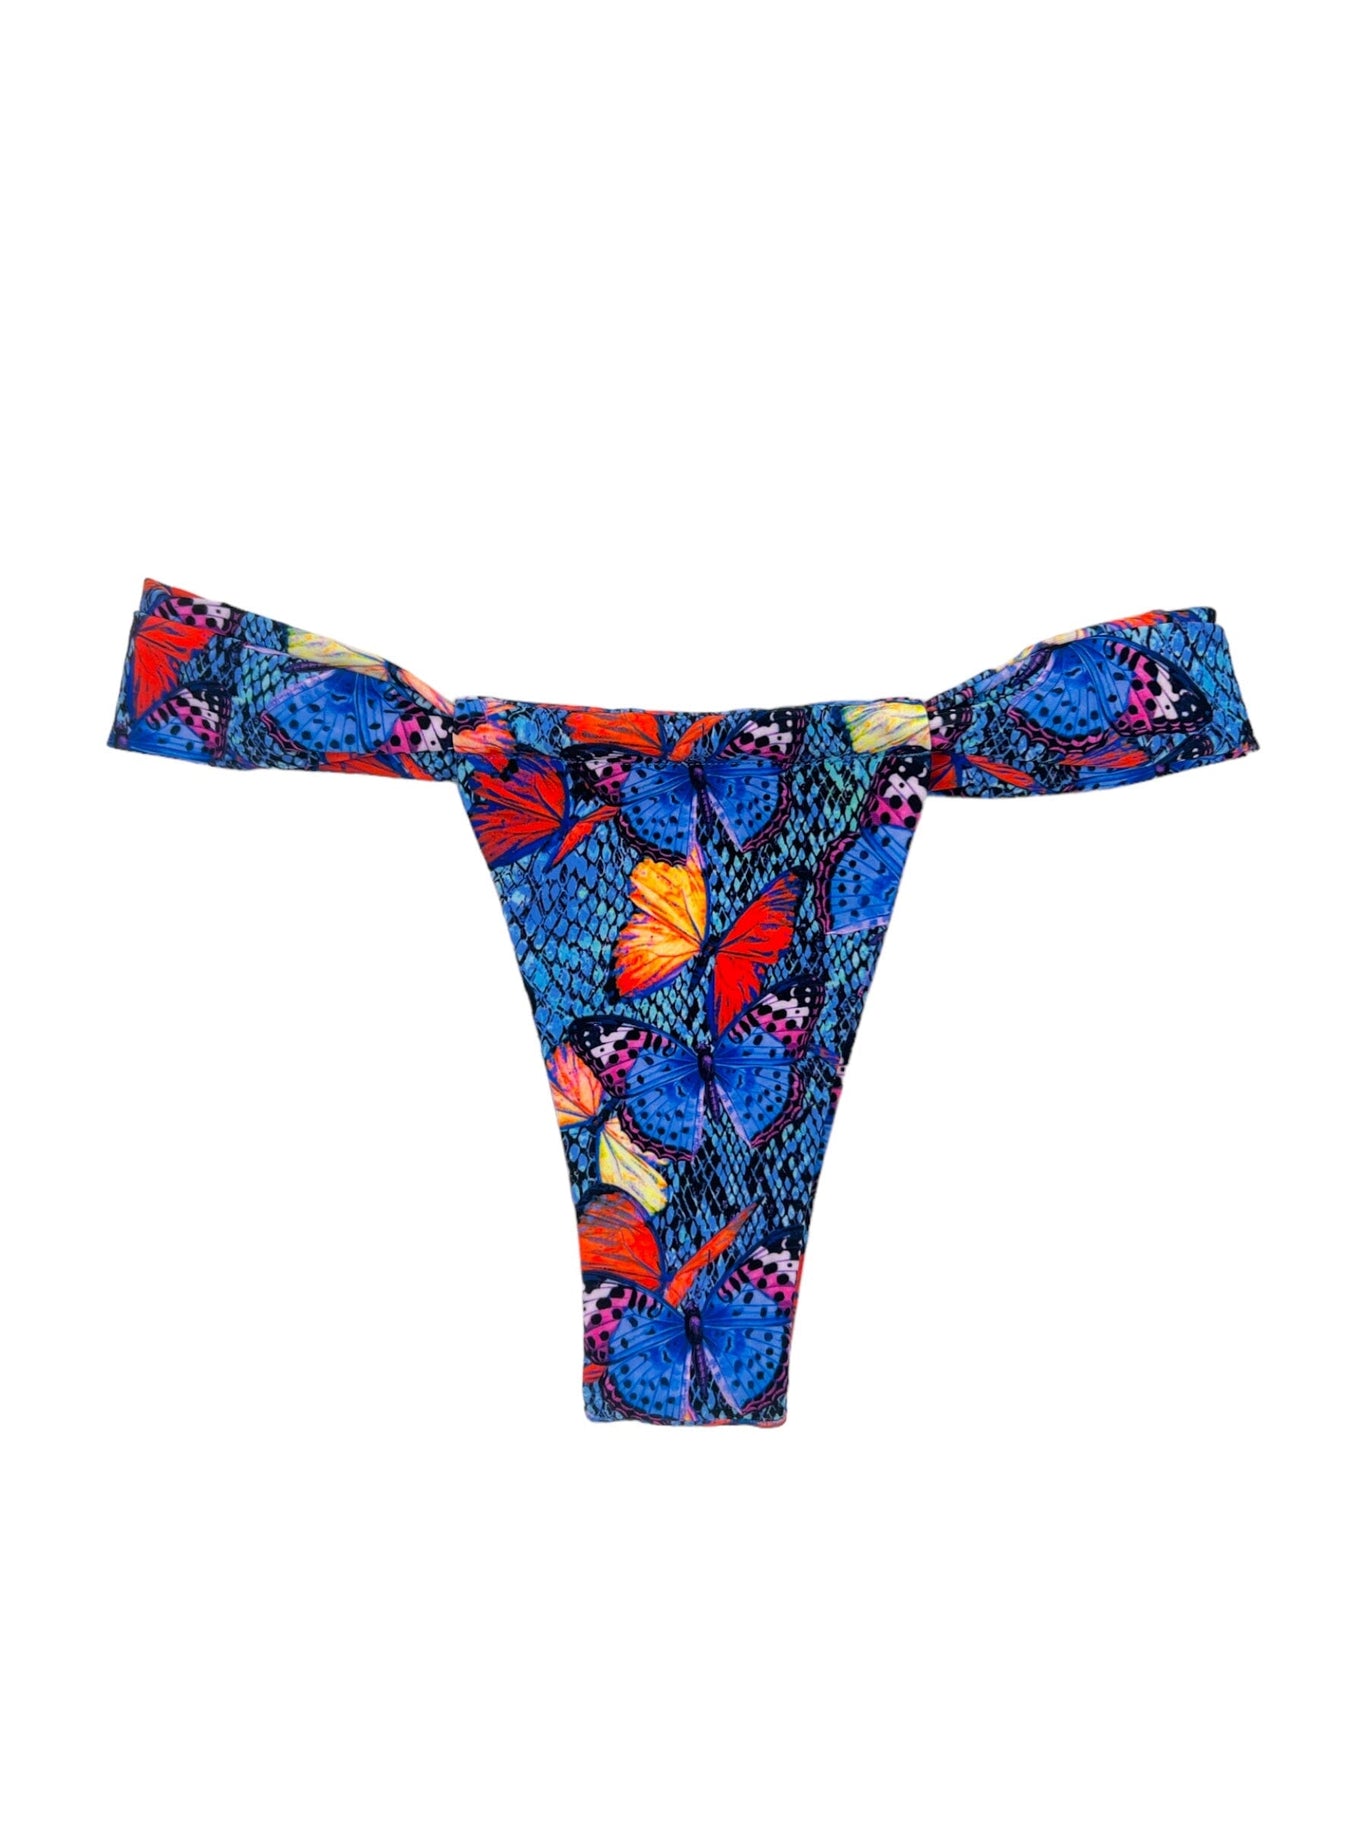 MONARCH VINTAGE SLIDE BOTTOM - Berry Beachy Swimwear